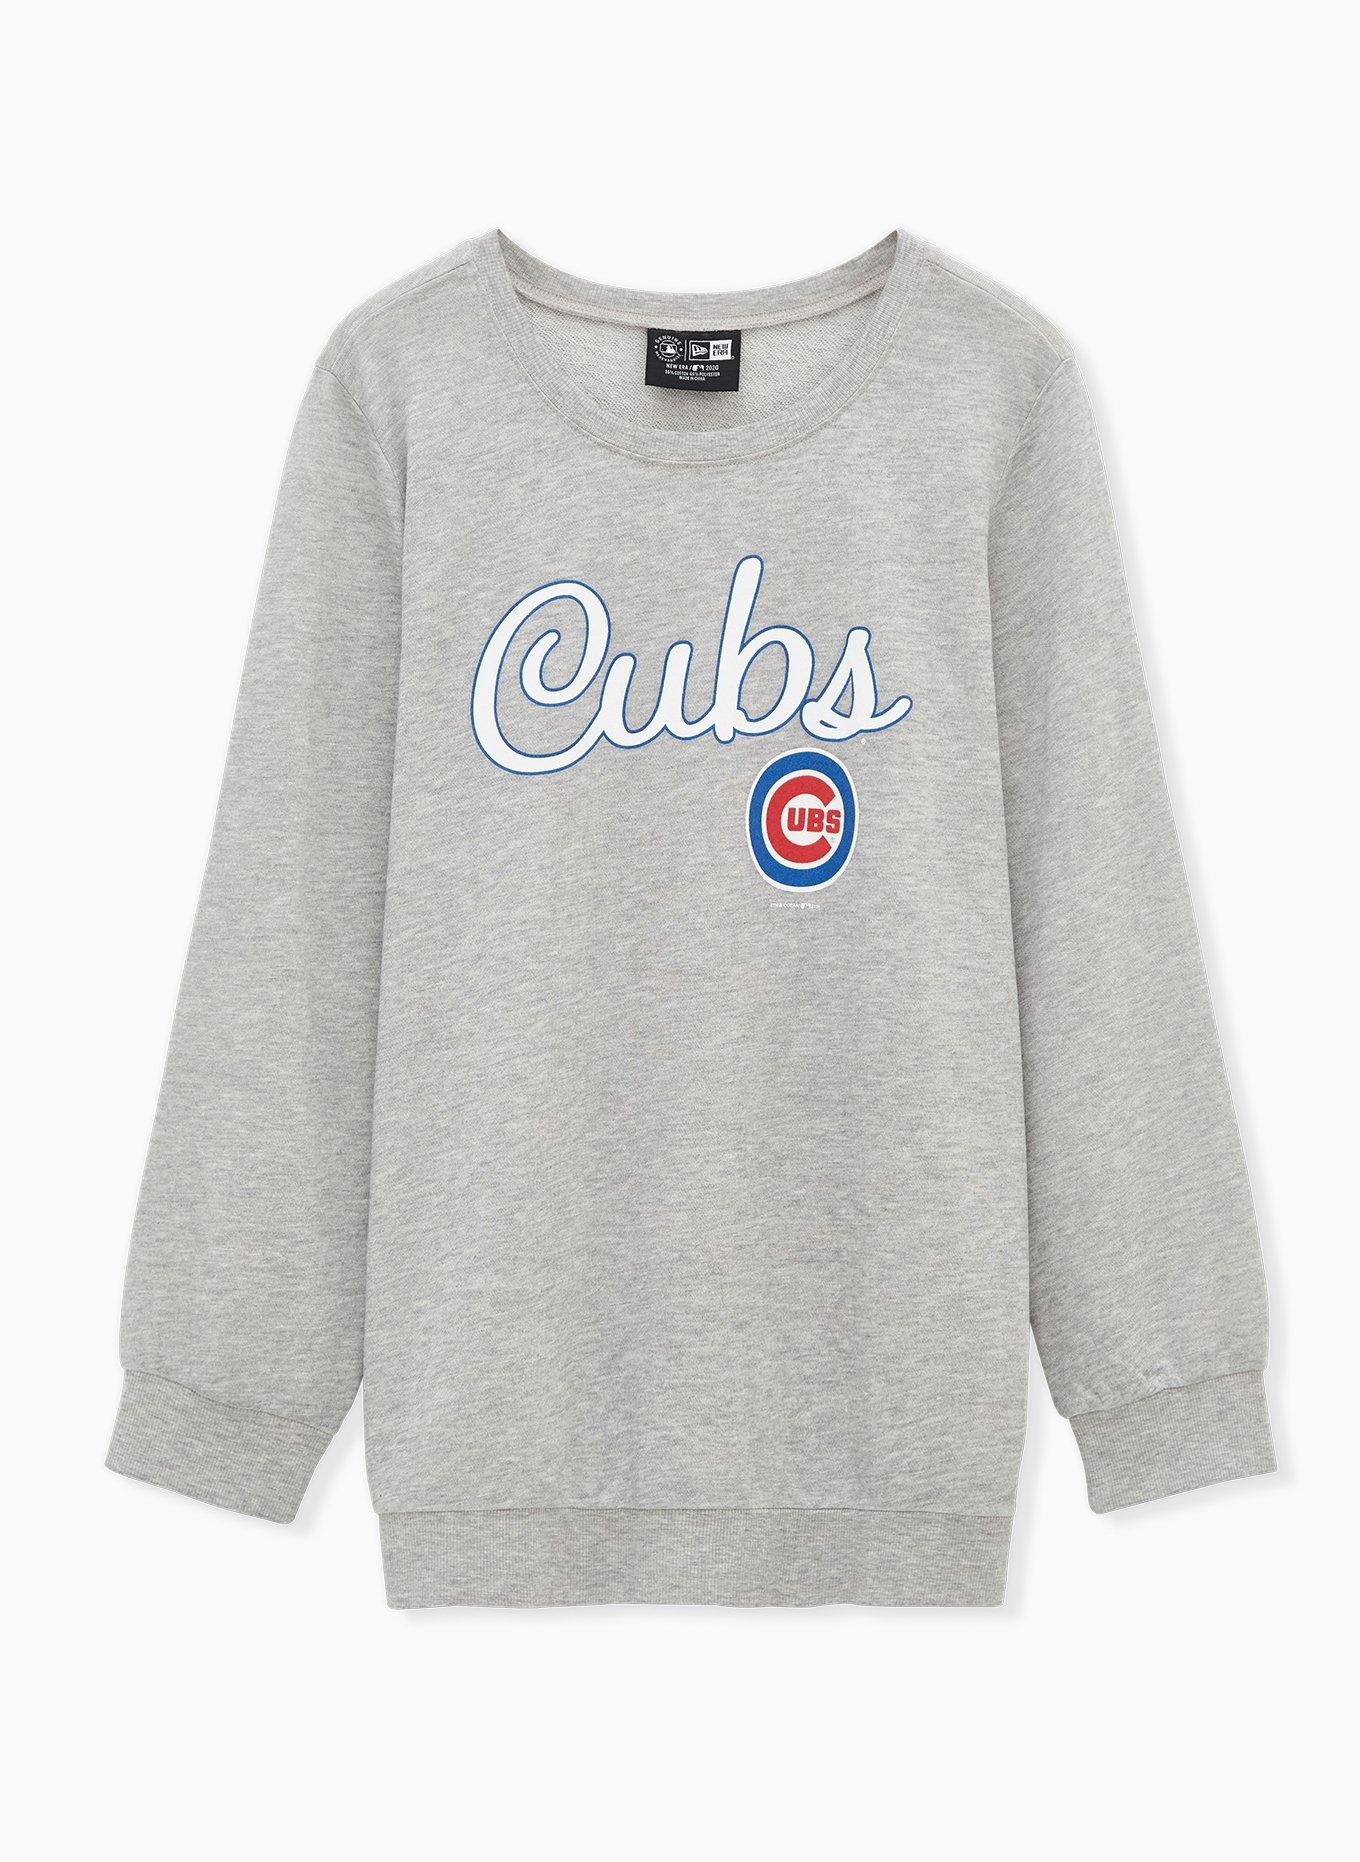 Plus Size - MLB Chicago Cubs Grey Burnout Sweatshirt - Torrid